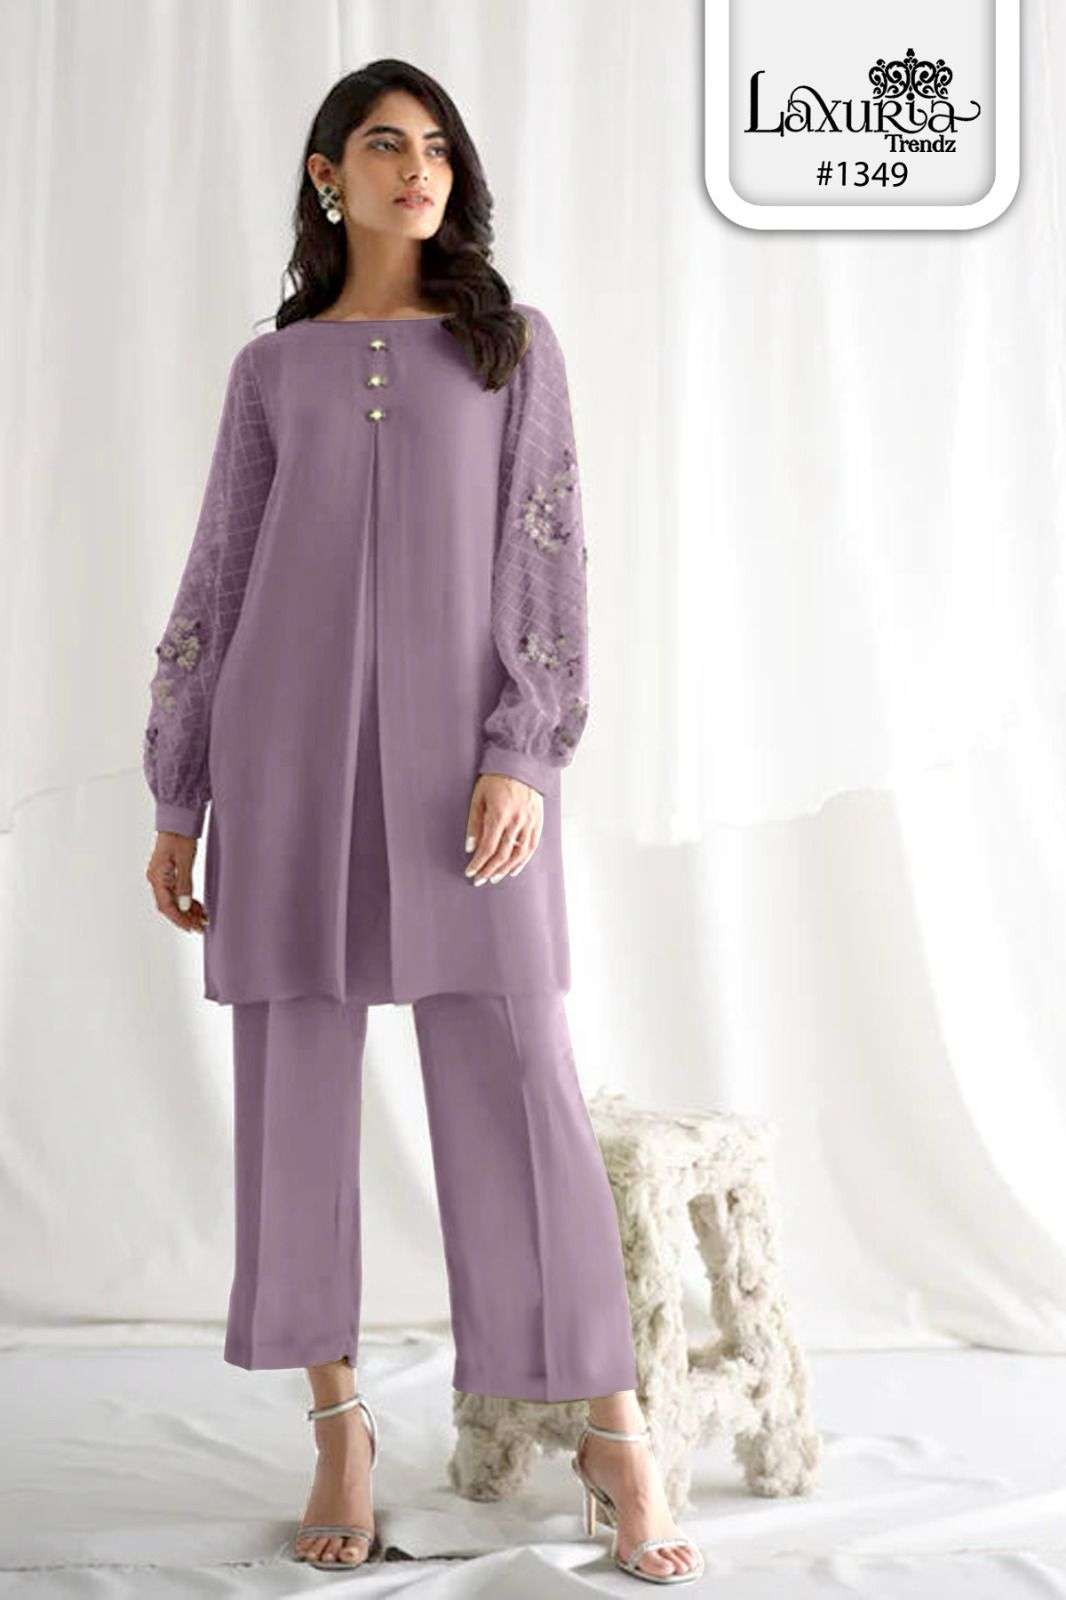 Luxuria Trendz 1349 Pakistani Style Occasion Wear Cord Set Latest Outfit